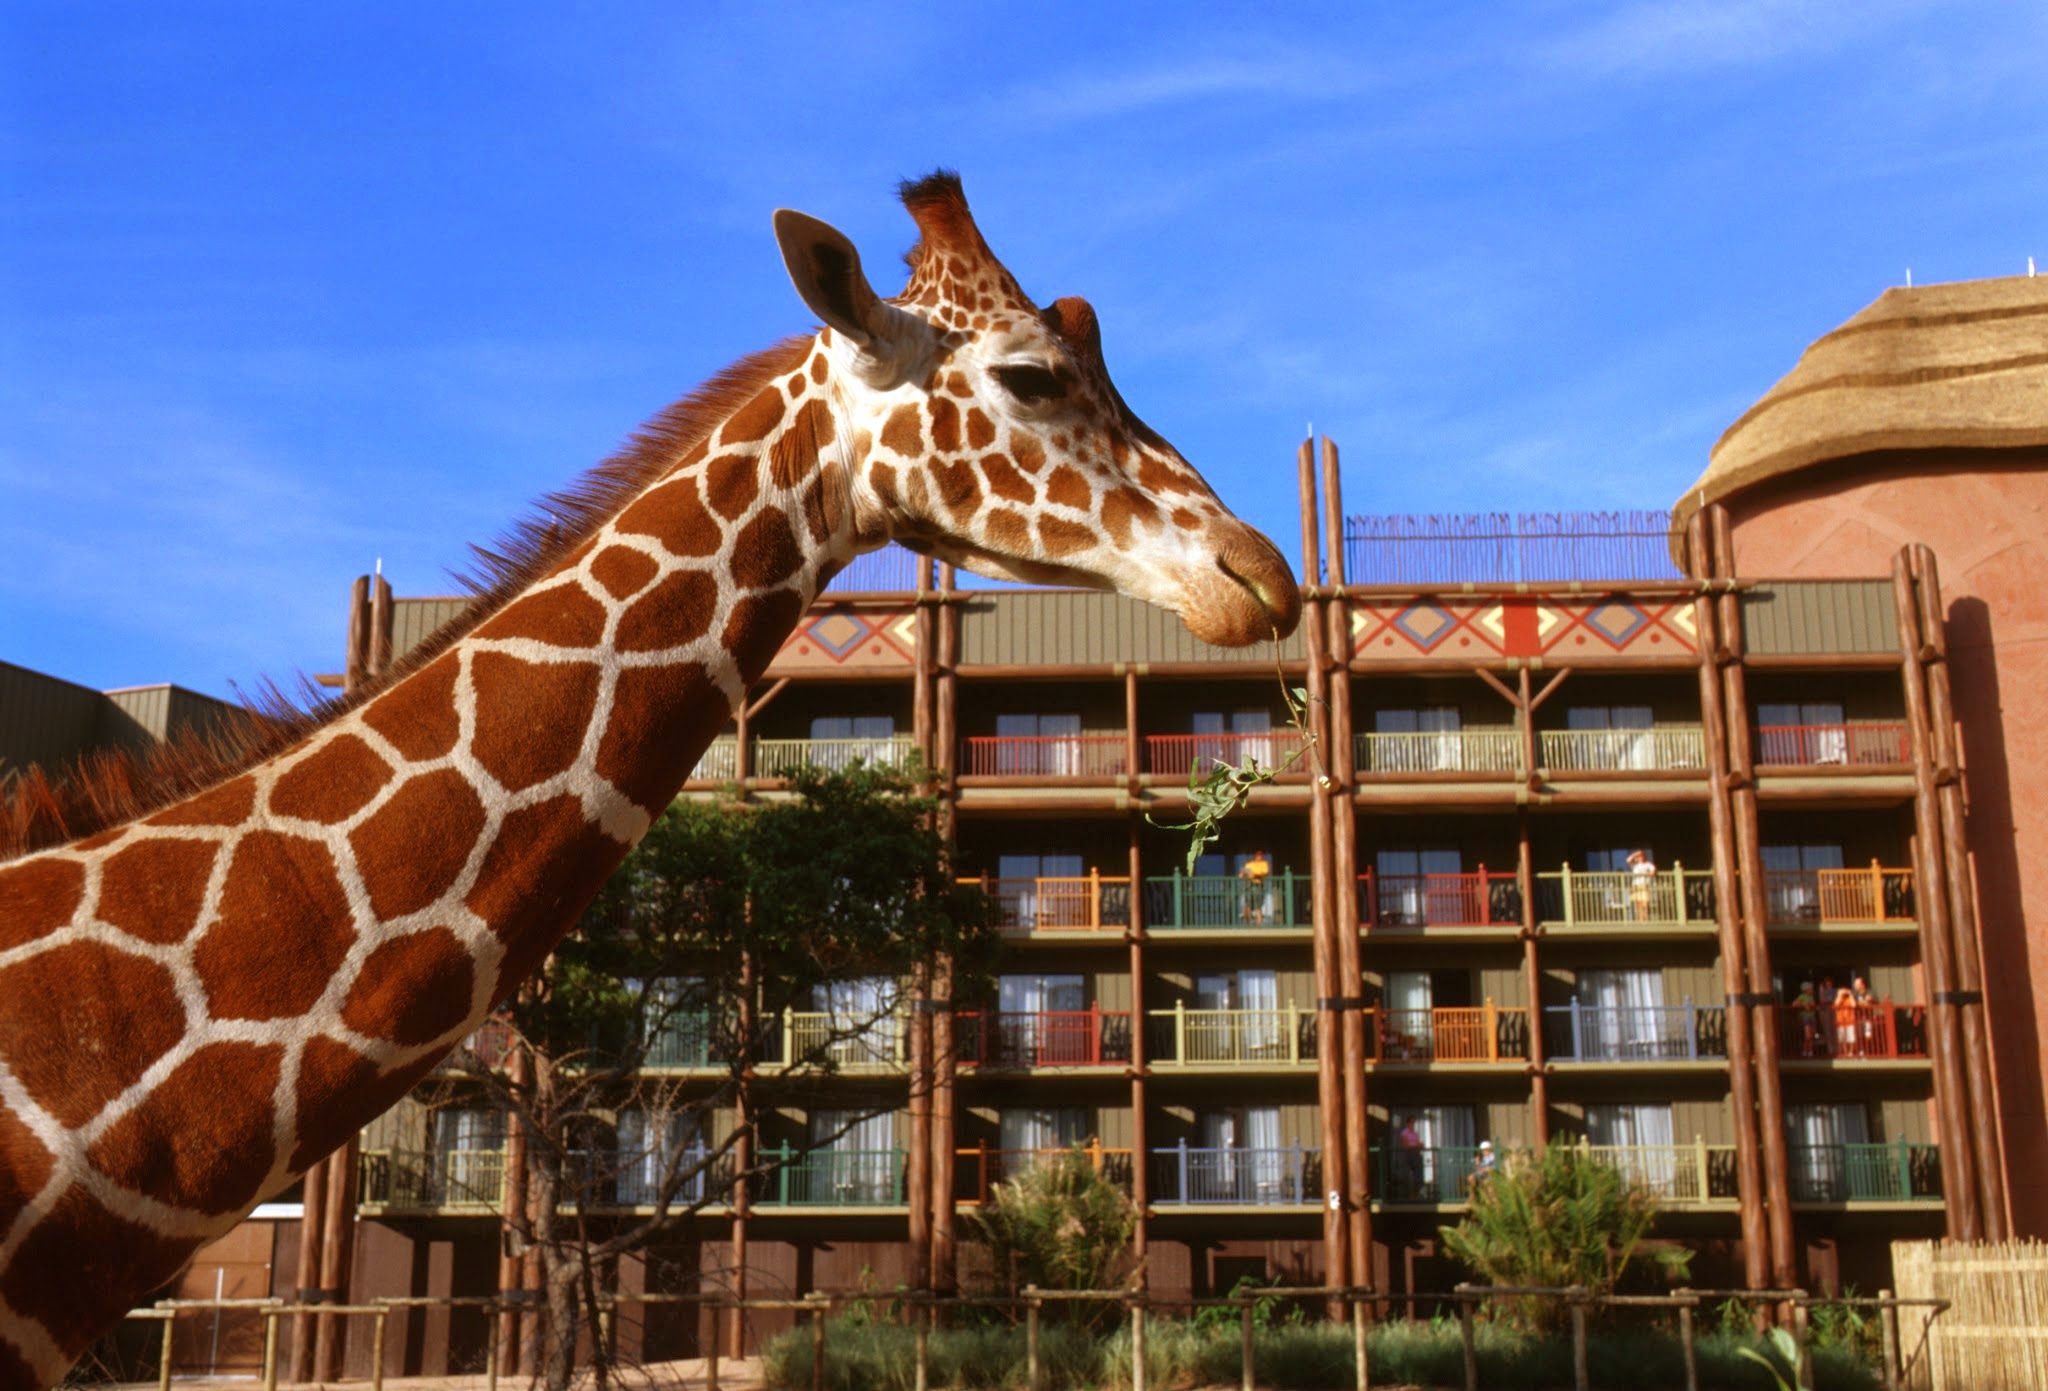 can you visit animal kingdom resort